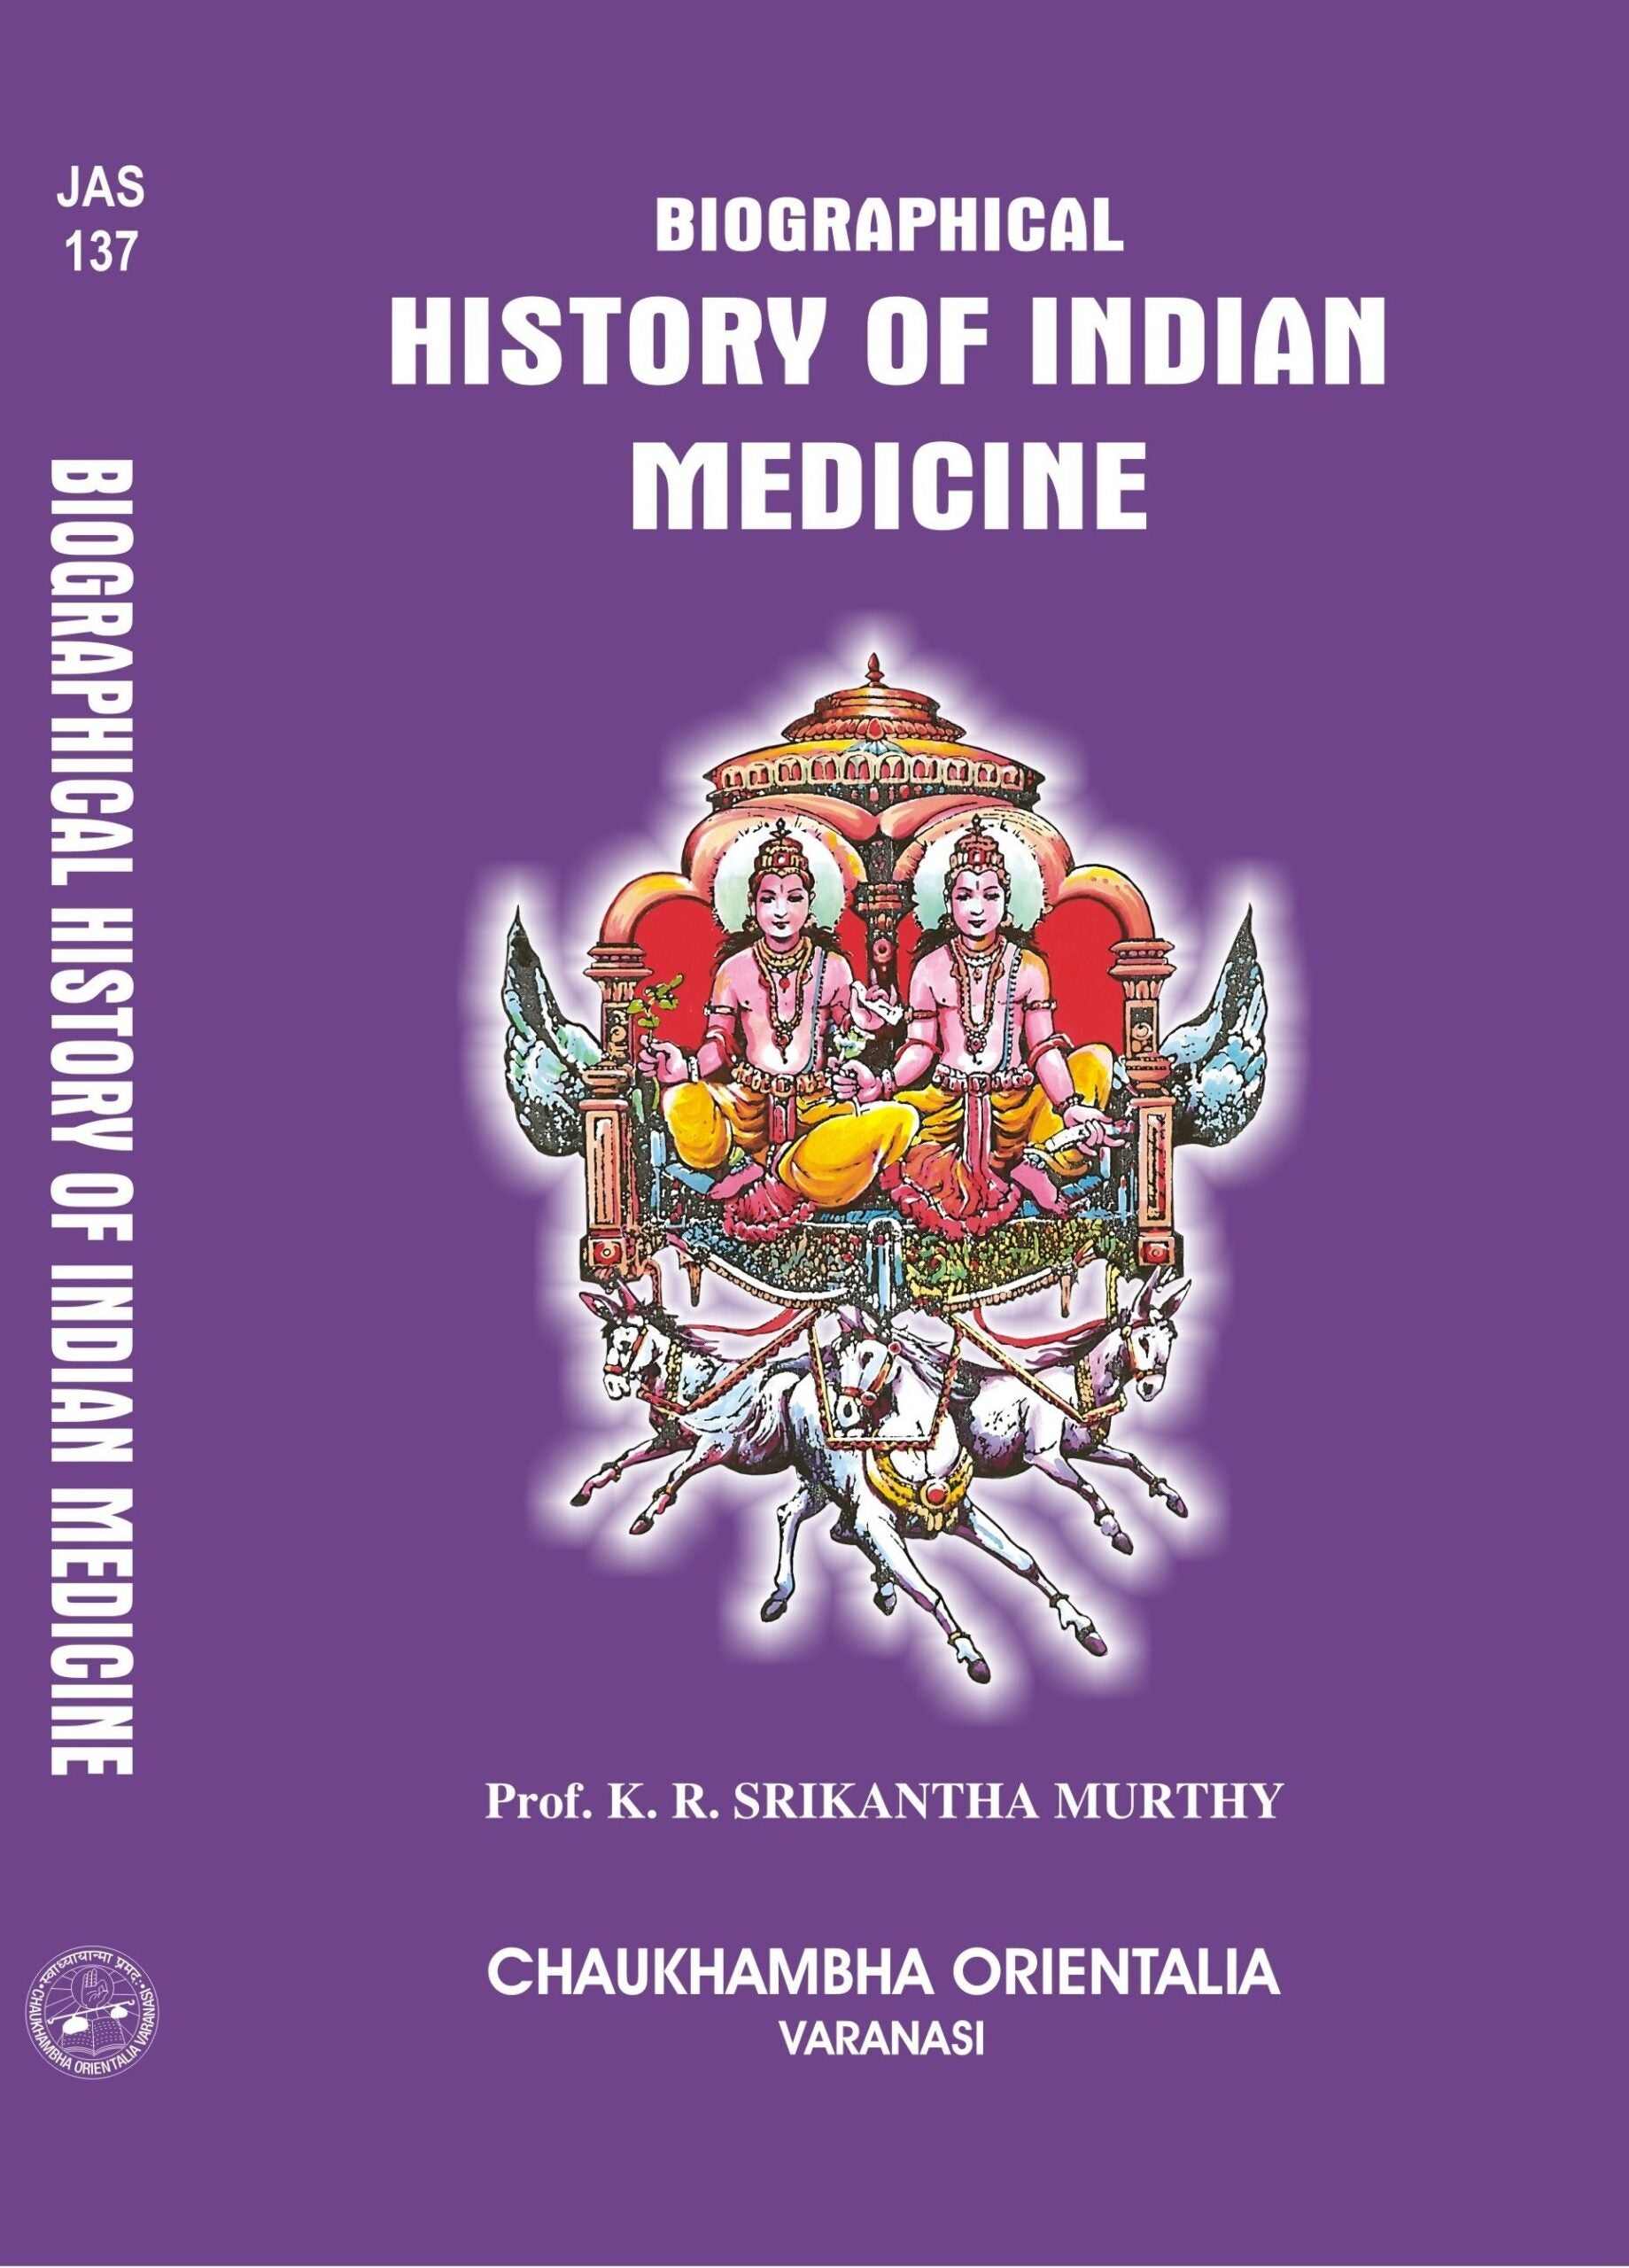 Chaukhambha Orientalia Biographical History of Indian Medicine